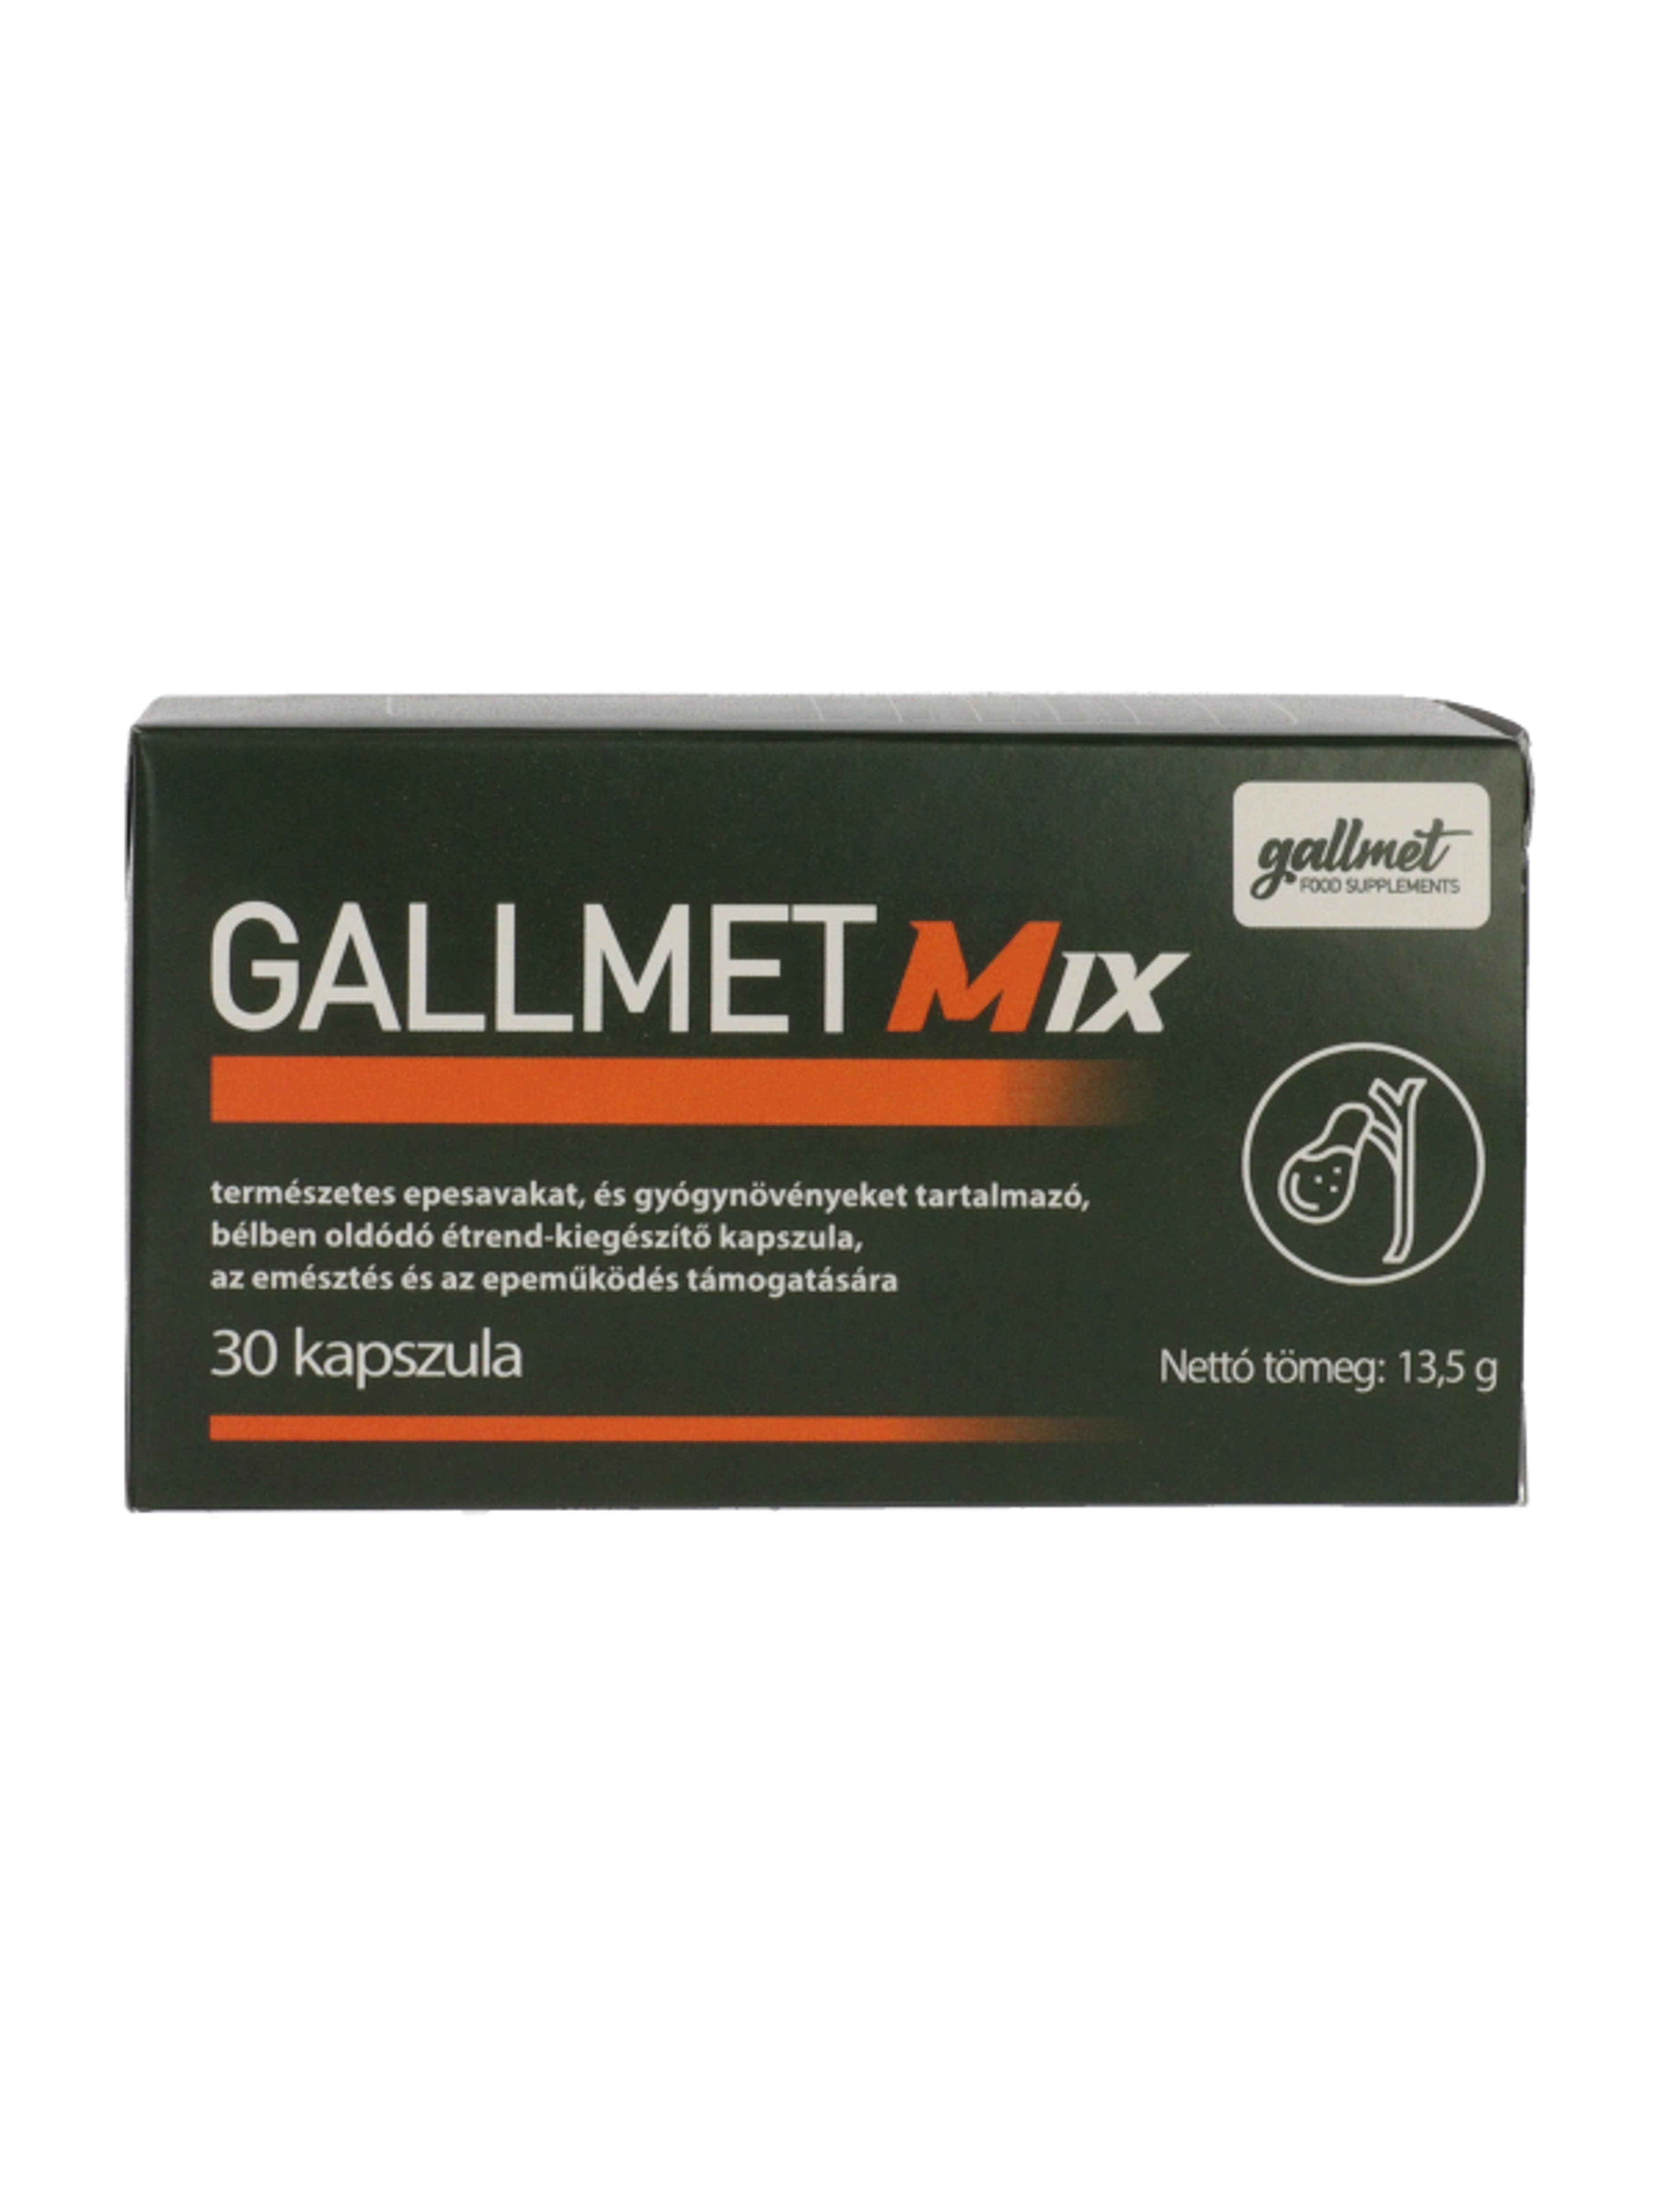 Gallmet-M étrend-kiegészítő kapszula - 30 db-2